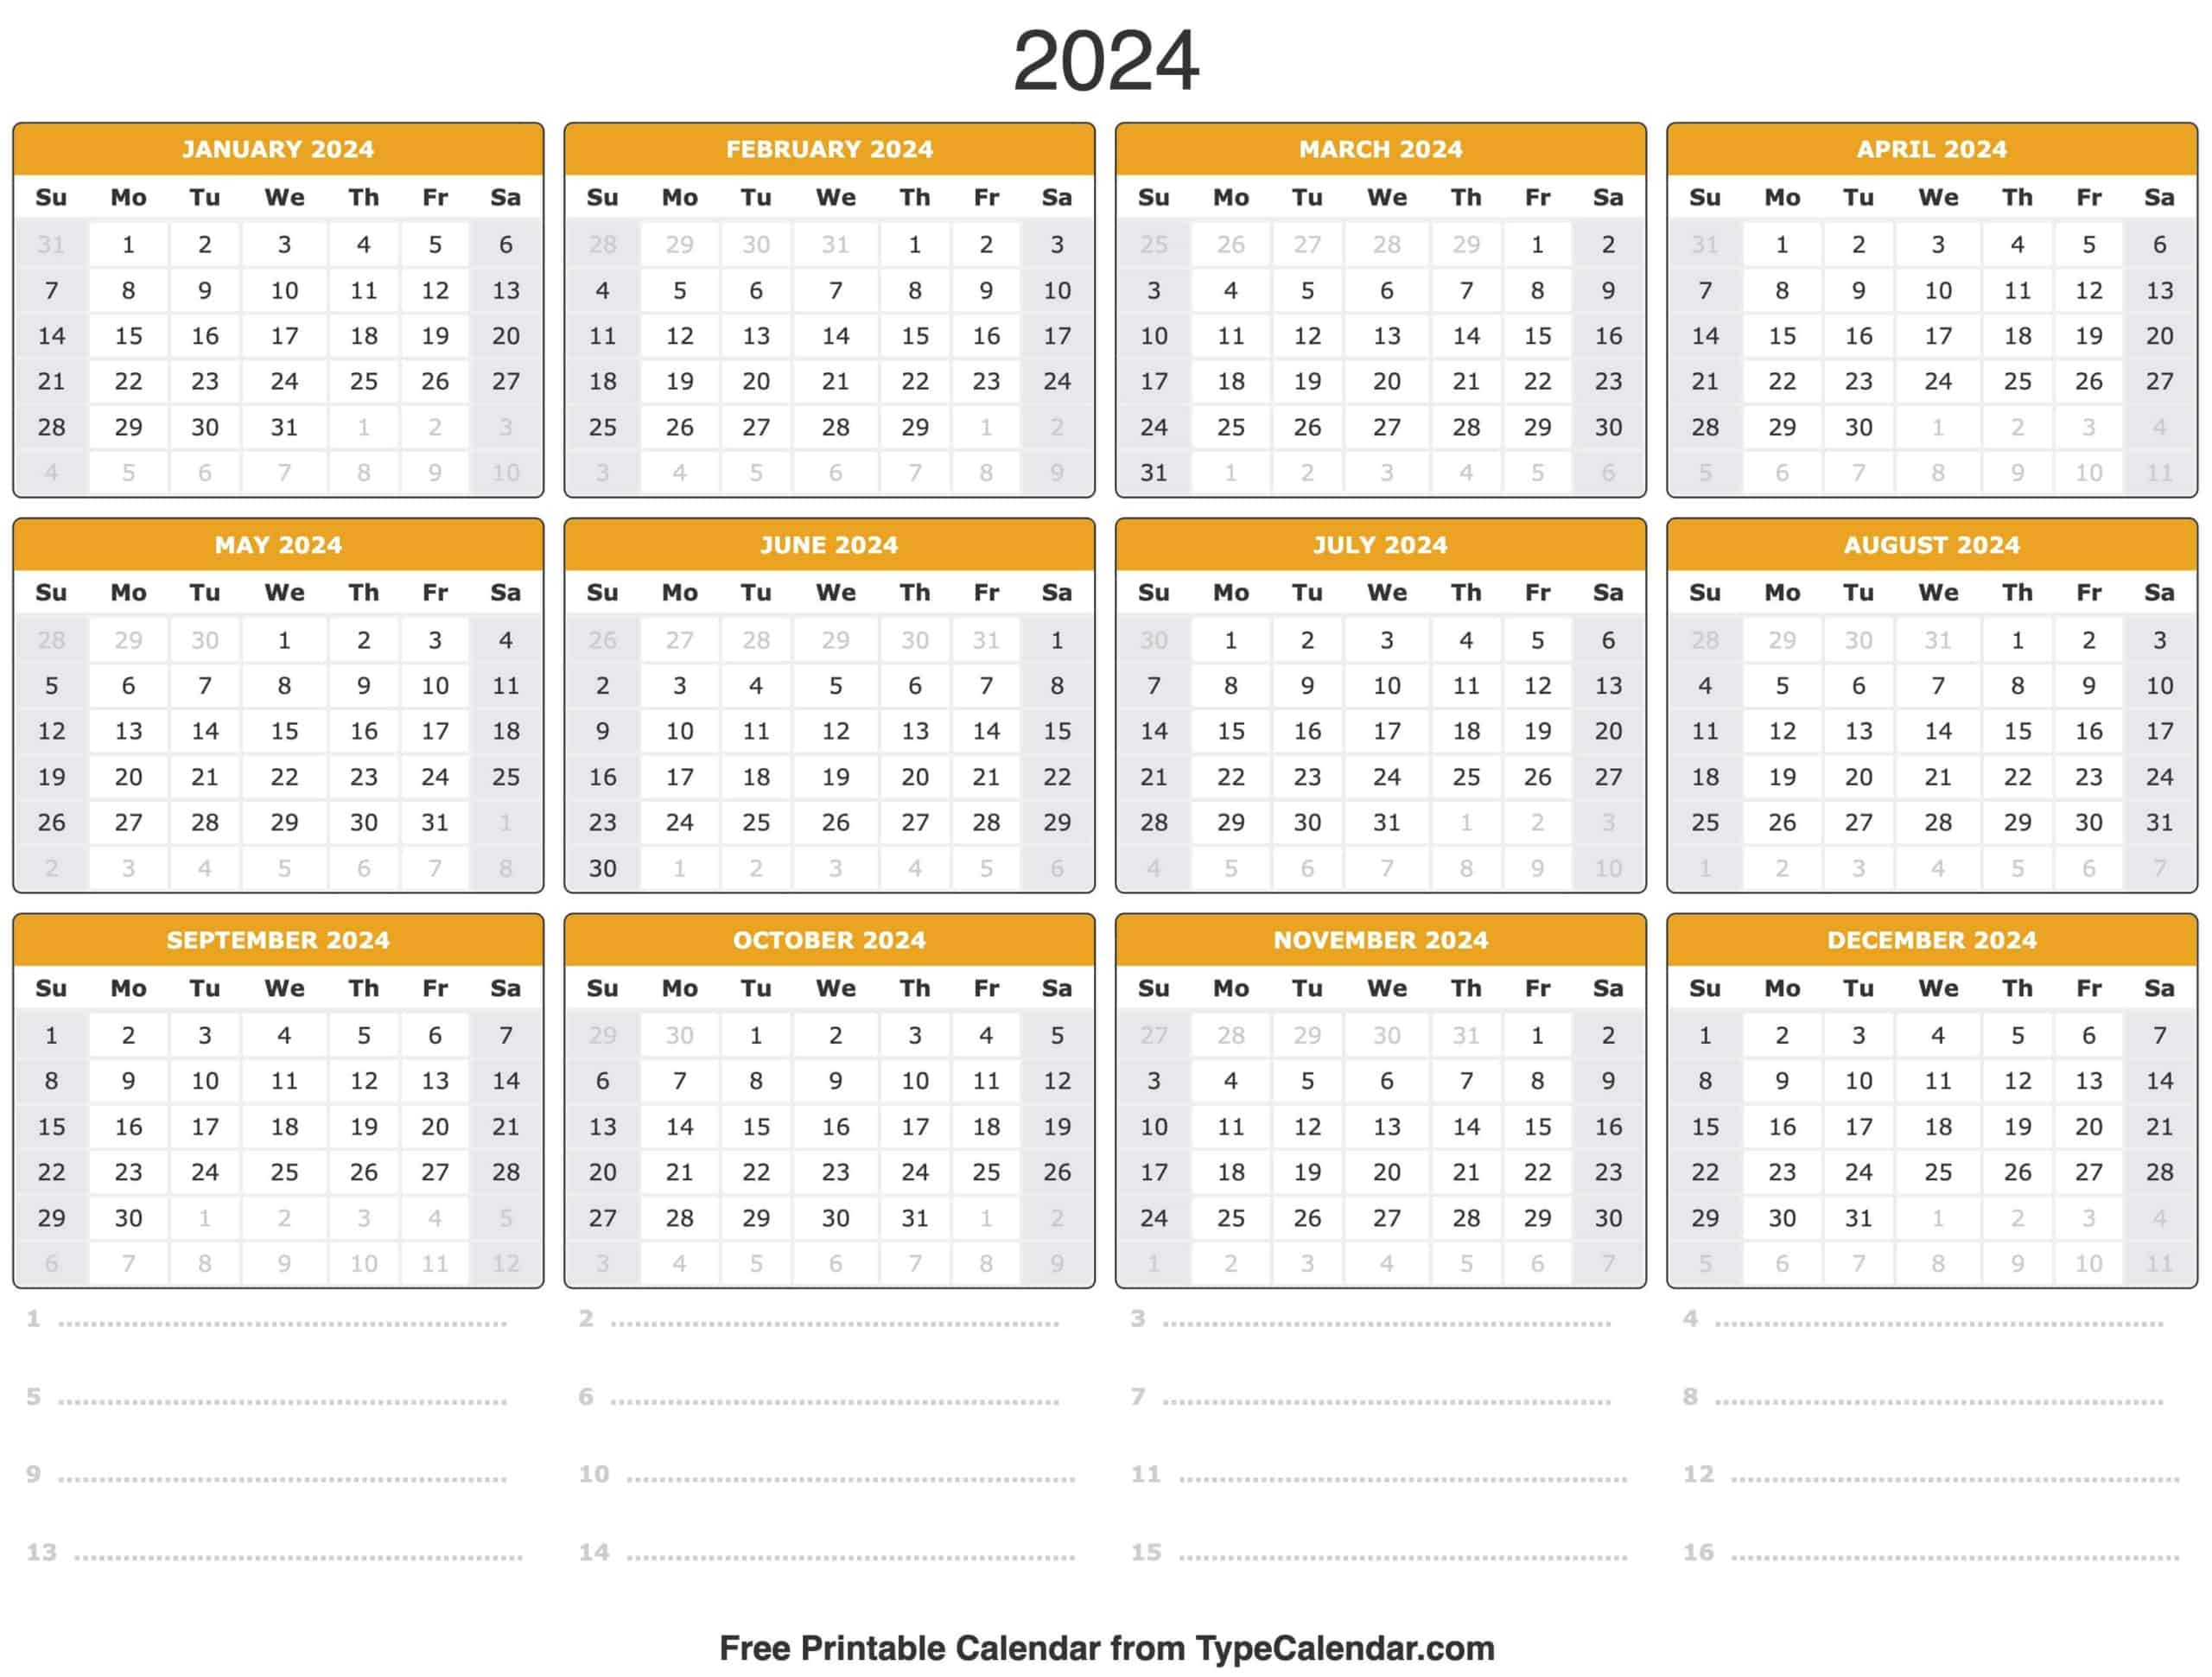 2024 Calendar: Free Printable Calendar With Holidays | 2024 Yearly Calendar Template Word